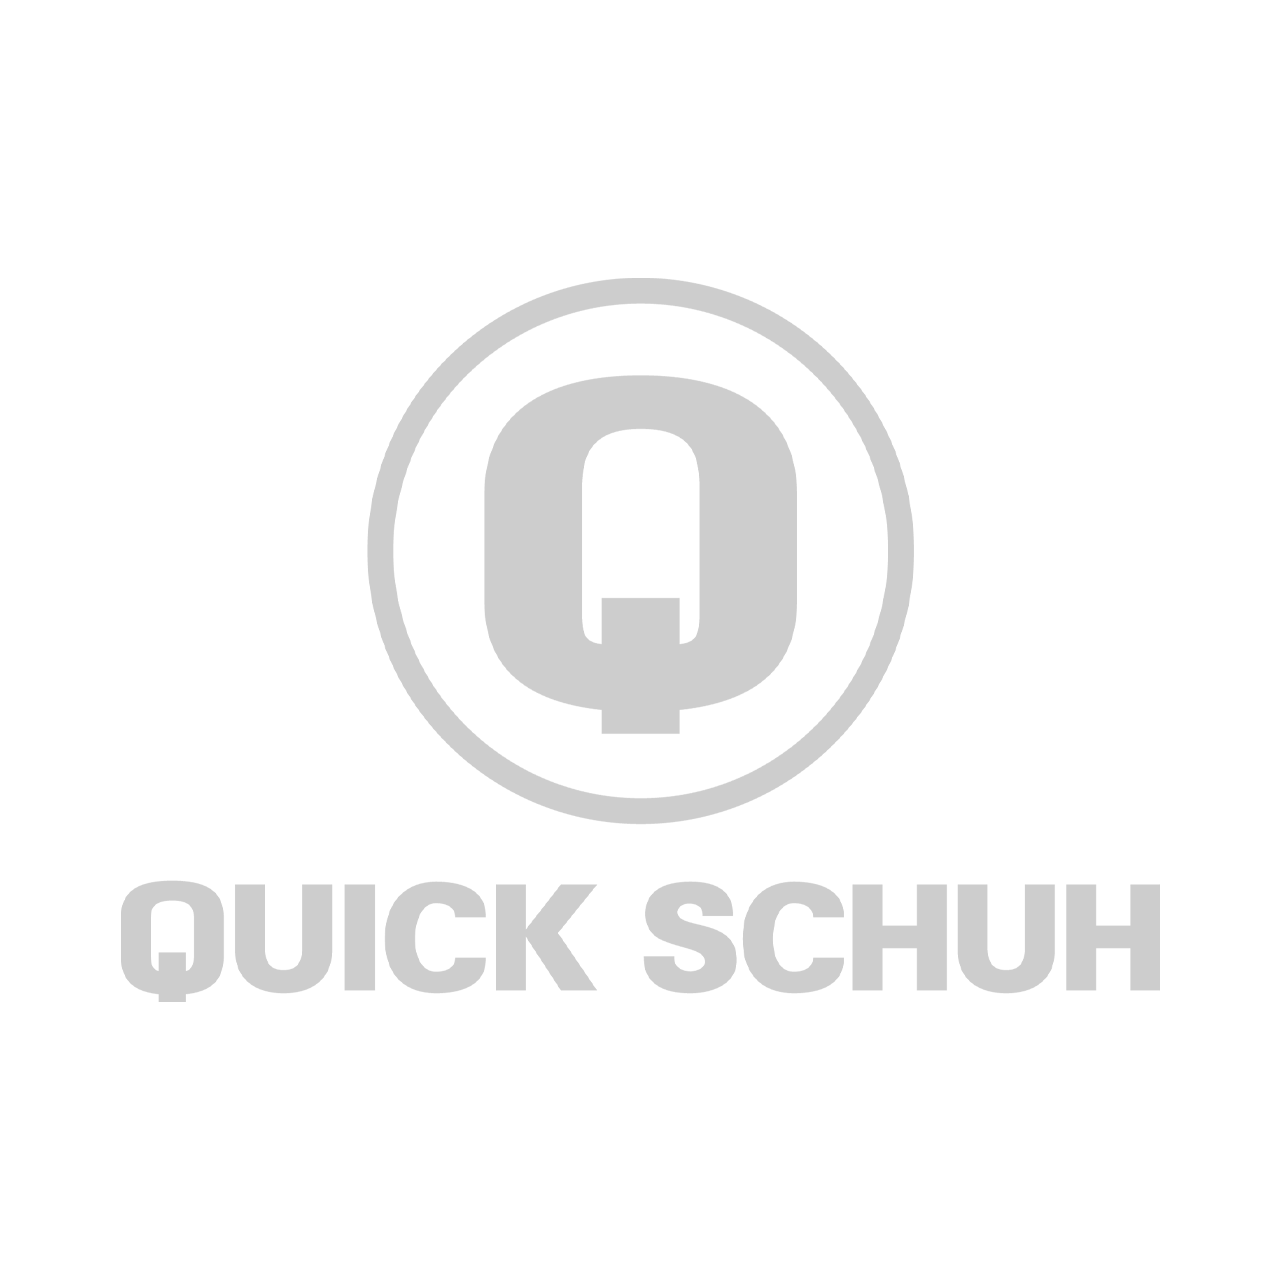 Logo Quick Schuh Oberstdorf